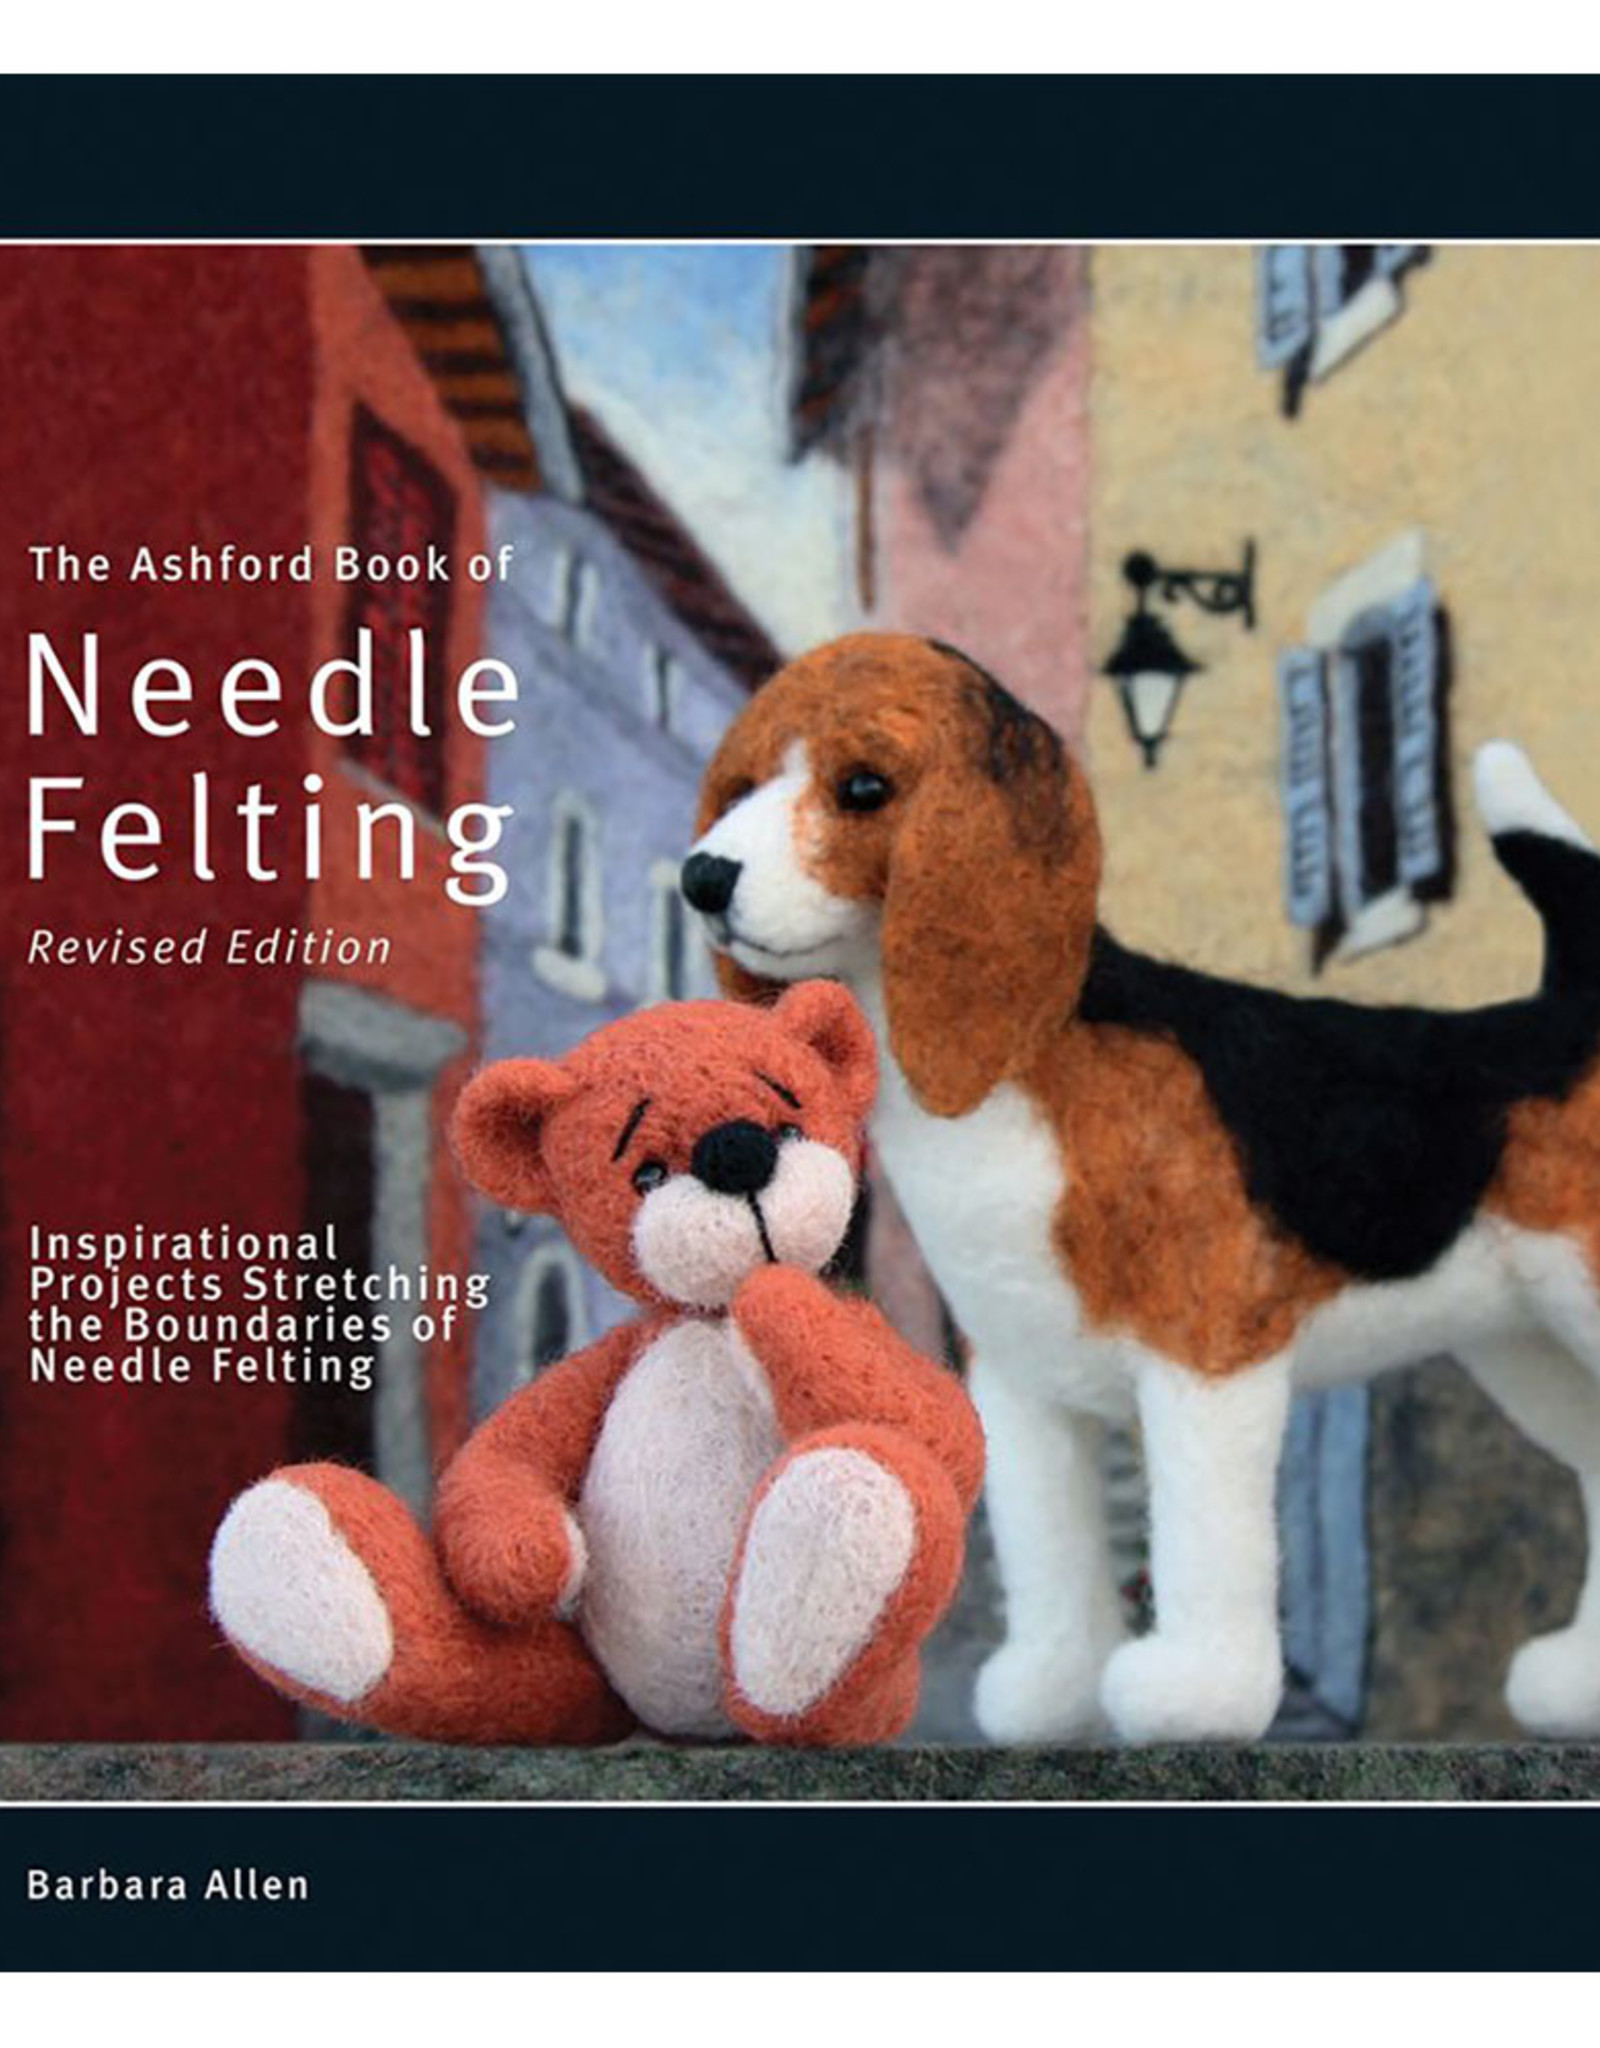 Ashford Needle Felting Kits